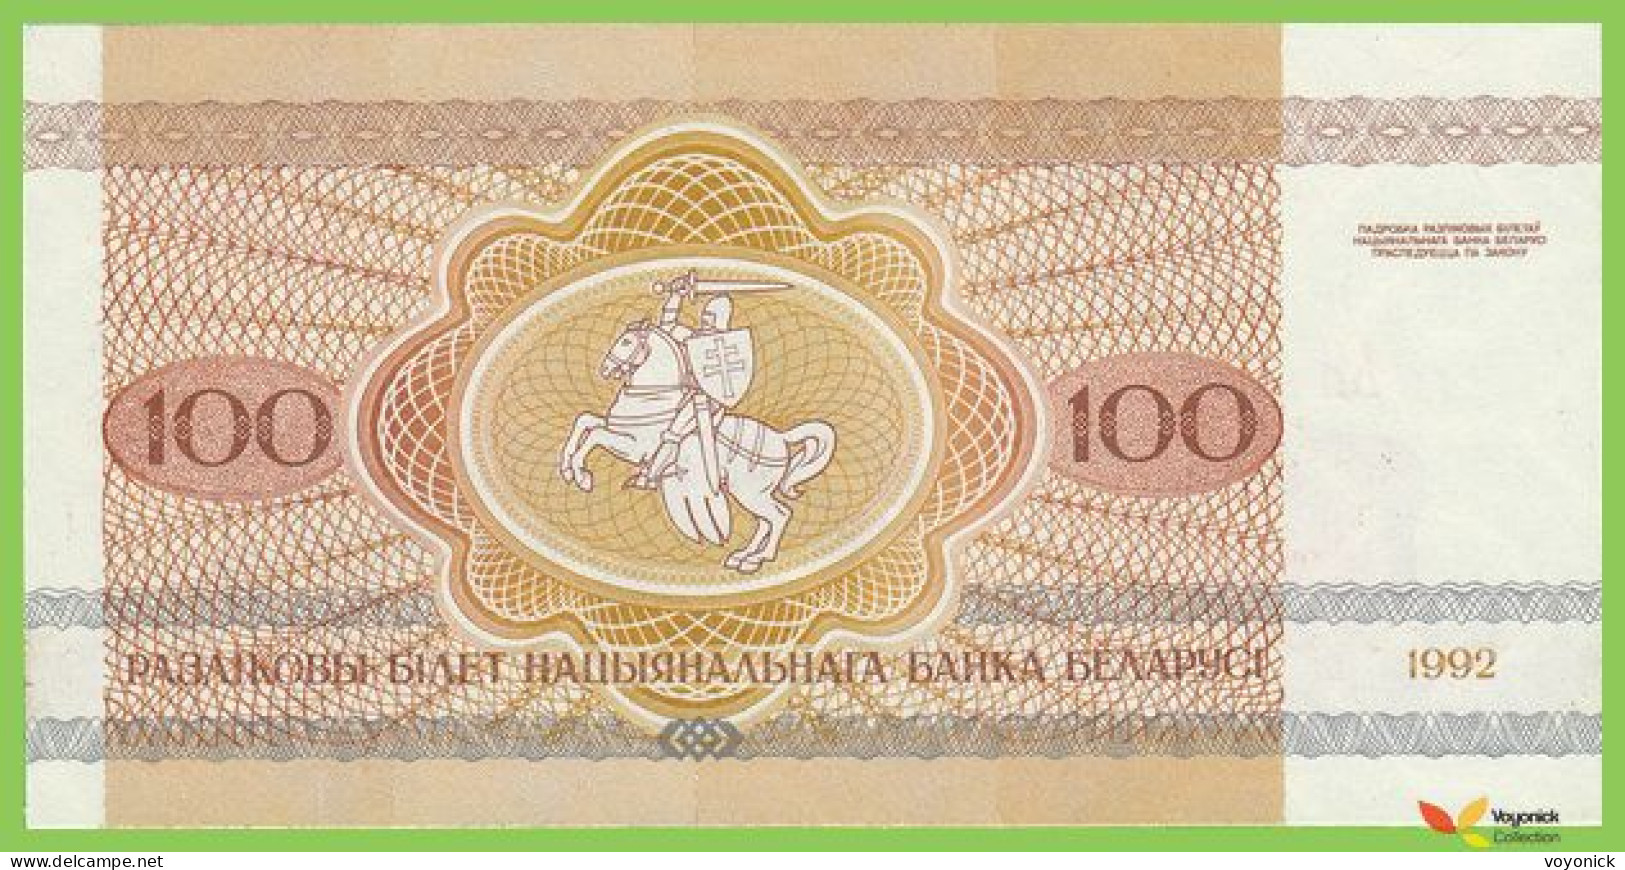 Voyo BELARUS 100 Rubles 1992 P8(2) B108a АЯ(AJa) UNC - Belarus